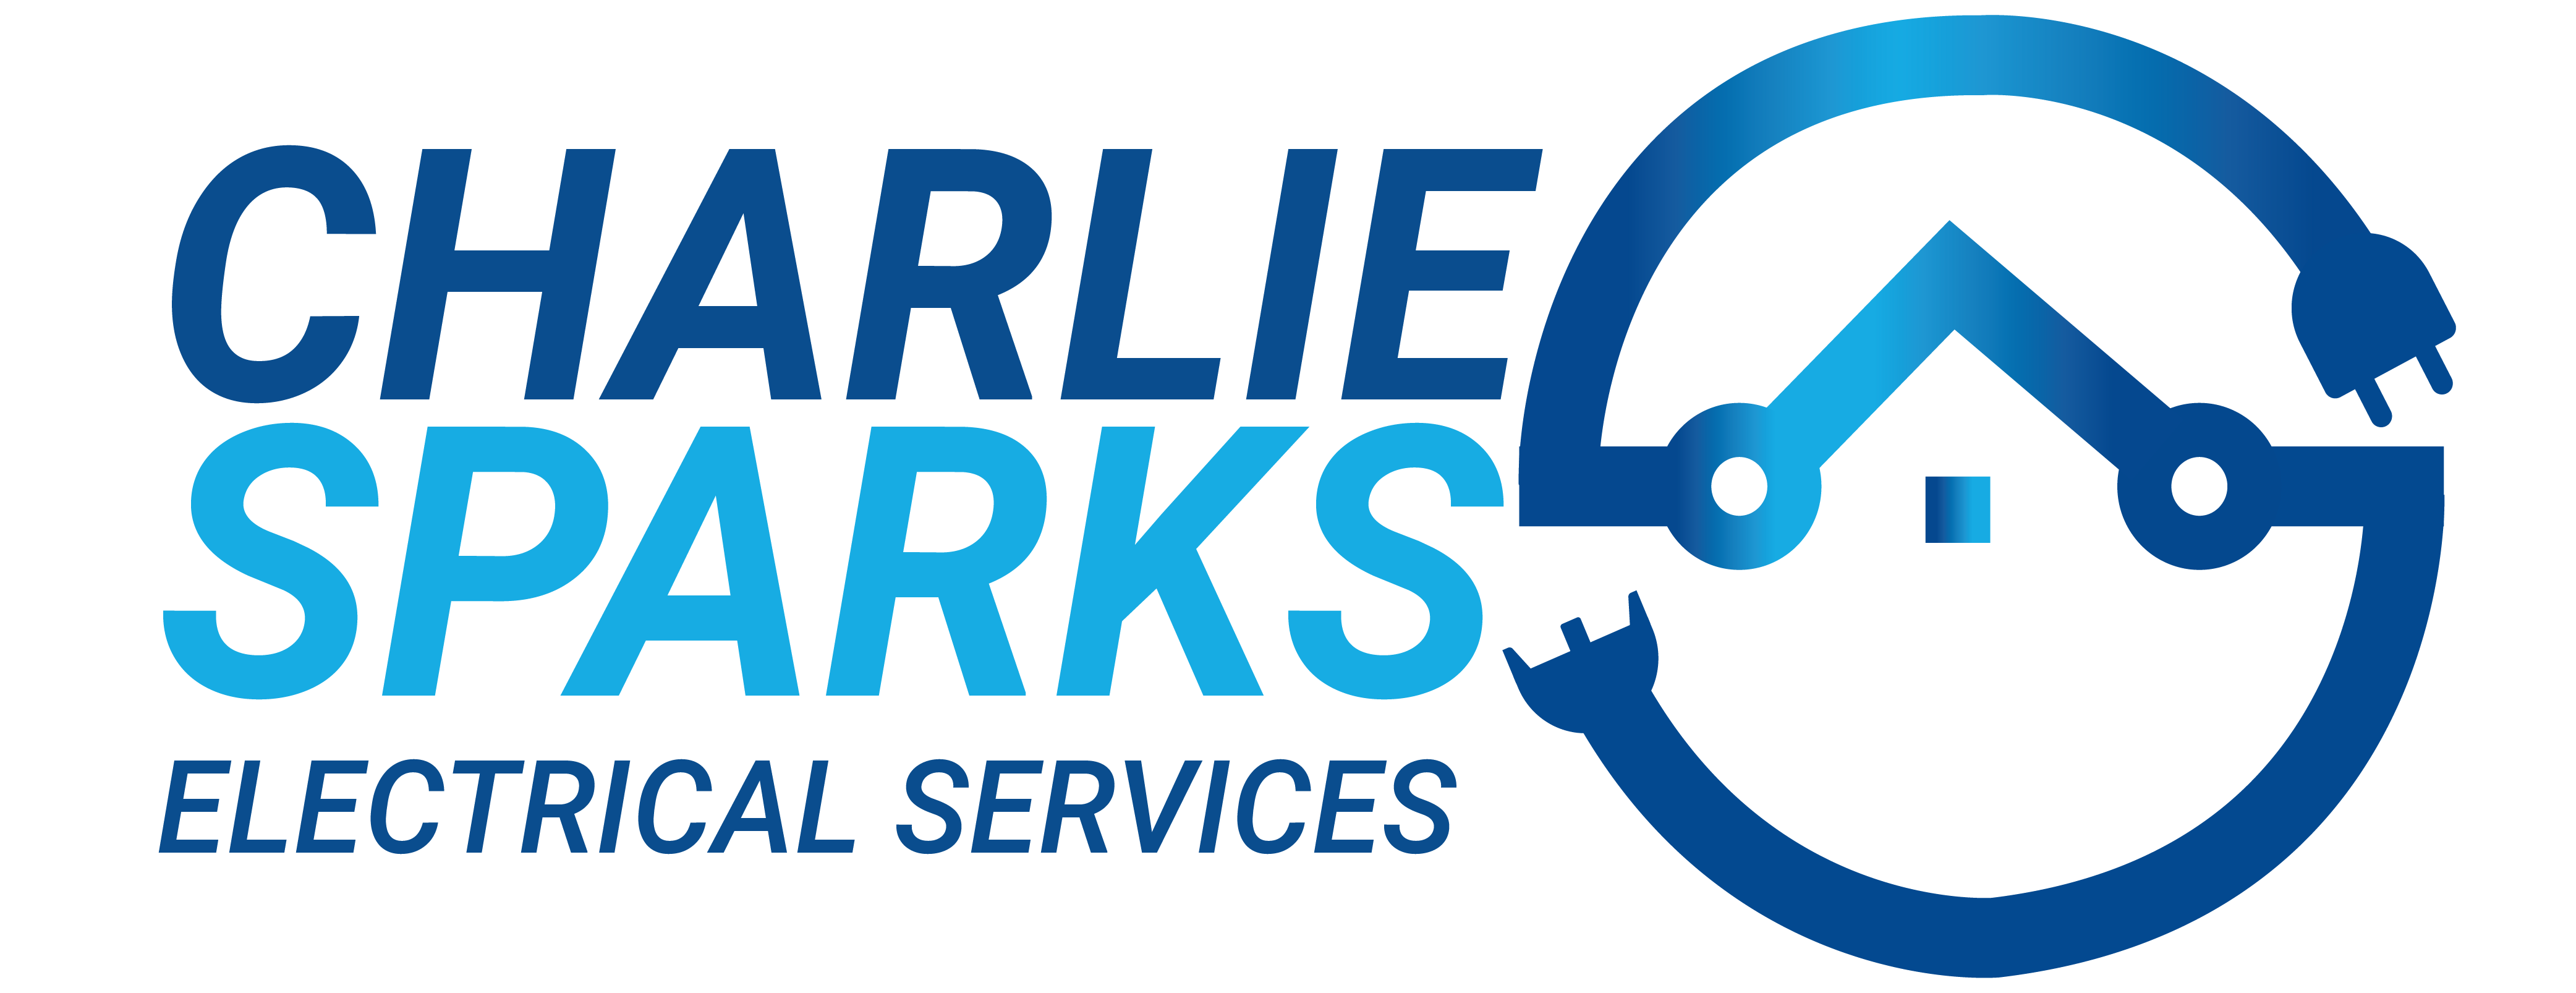 Charlie Sparks Electrical Services Logo